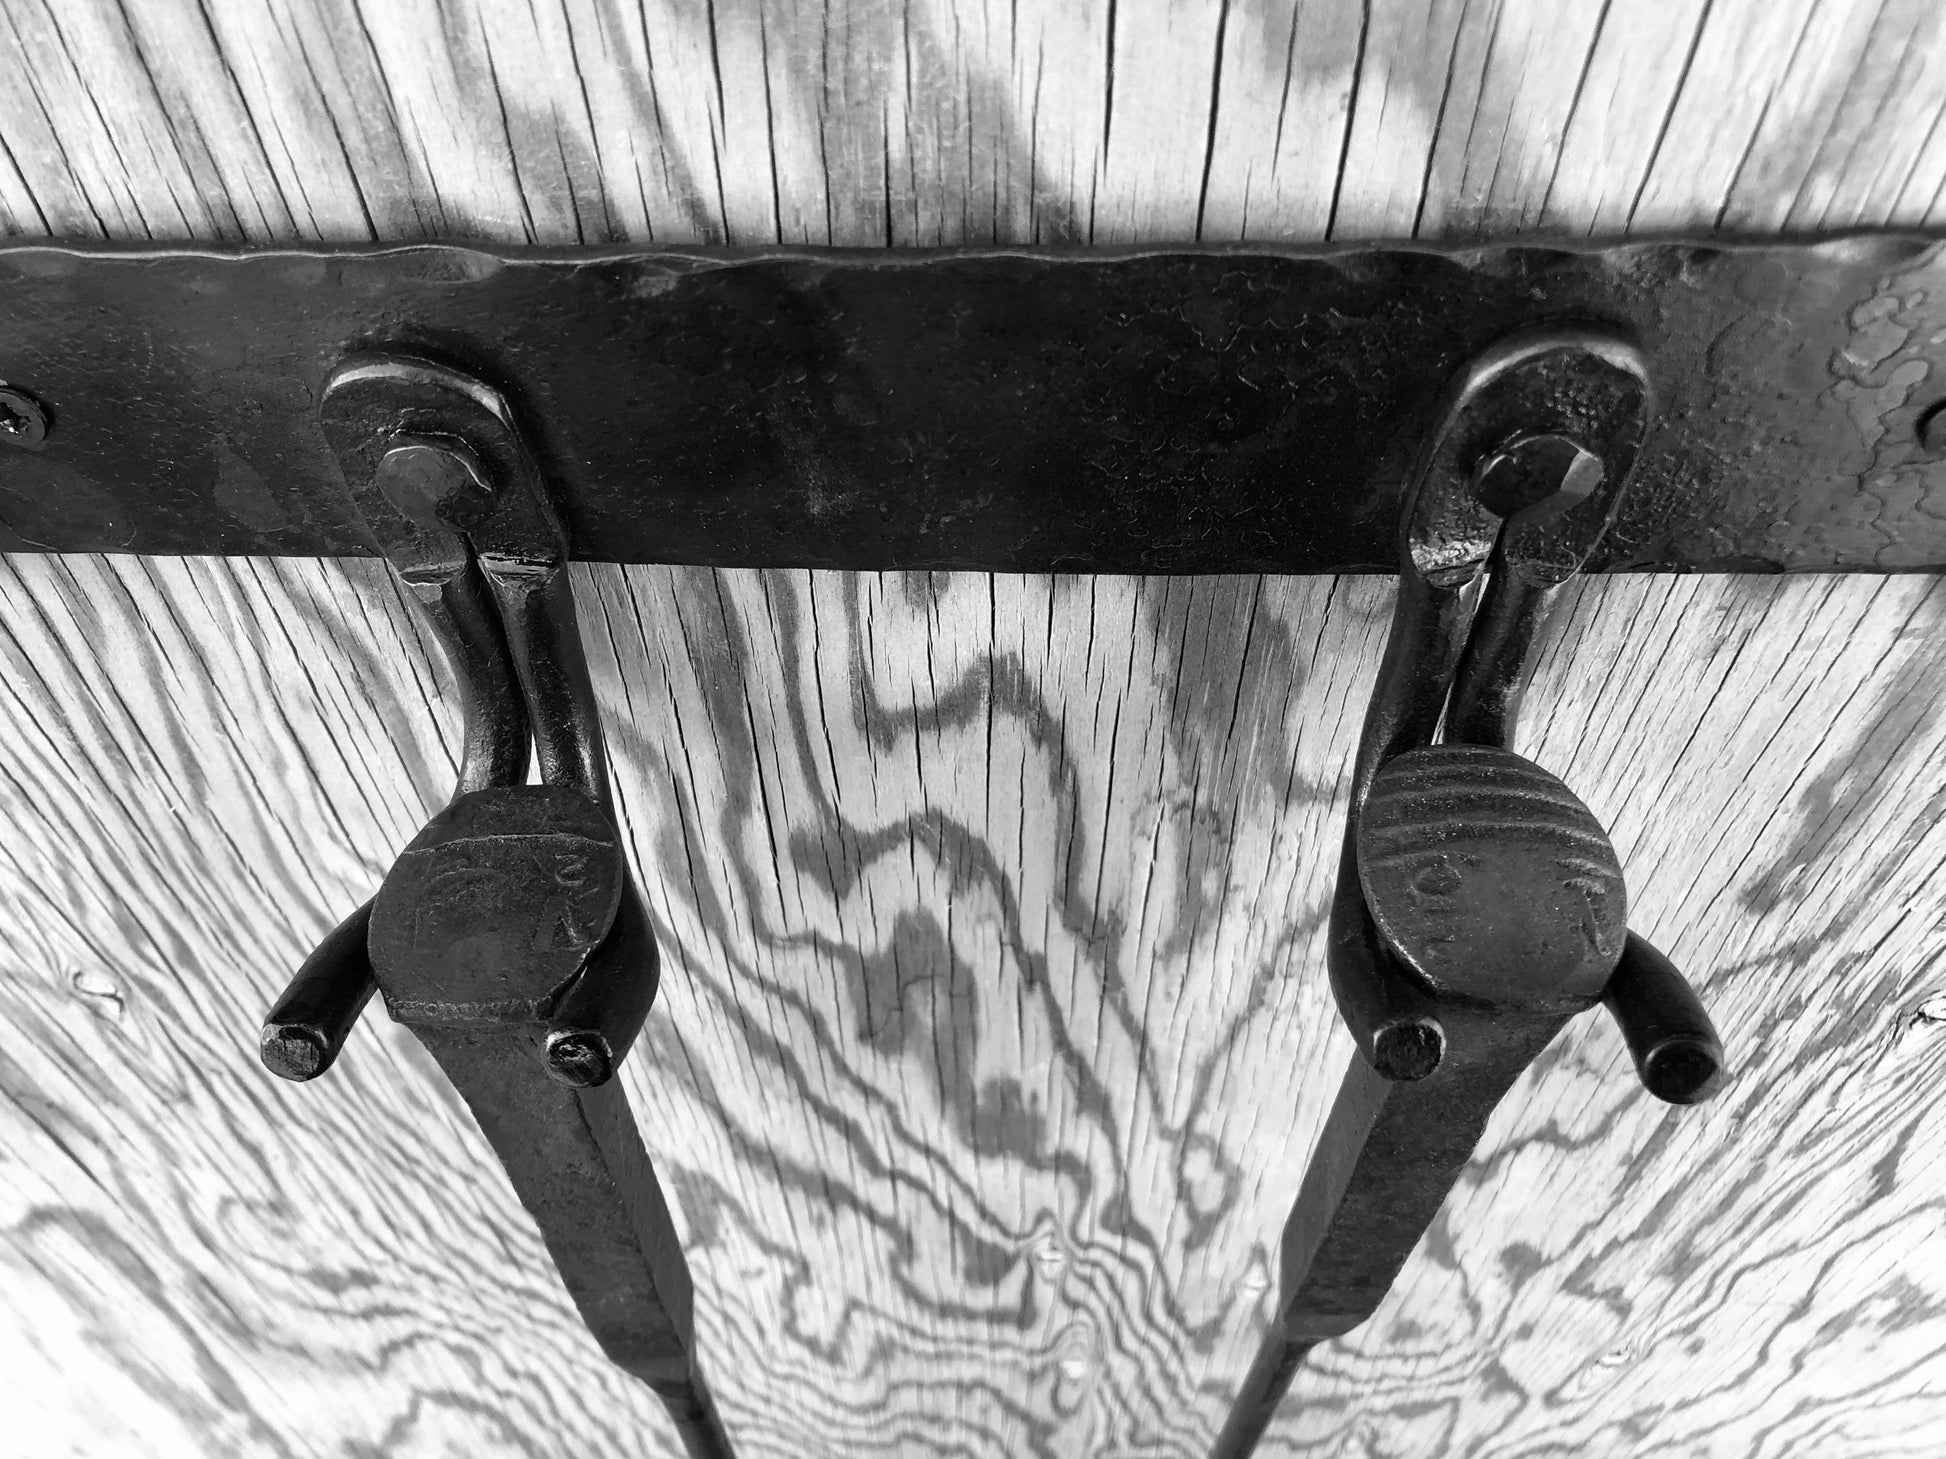 Larger Railroad Spike Cast Iron Hooks Handmade Blacksmith, Wall Mounted,  Farmhouse Decor Cast Iron Wall Hooks, Vintage Hooks for Hanging